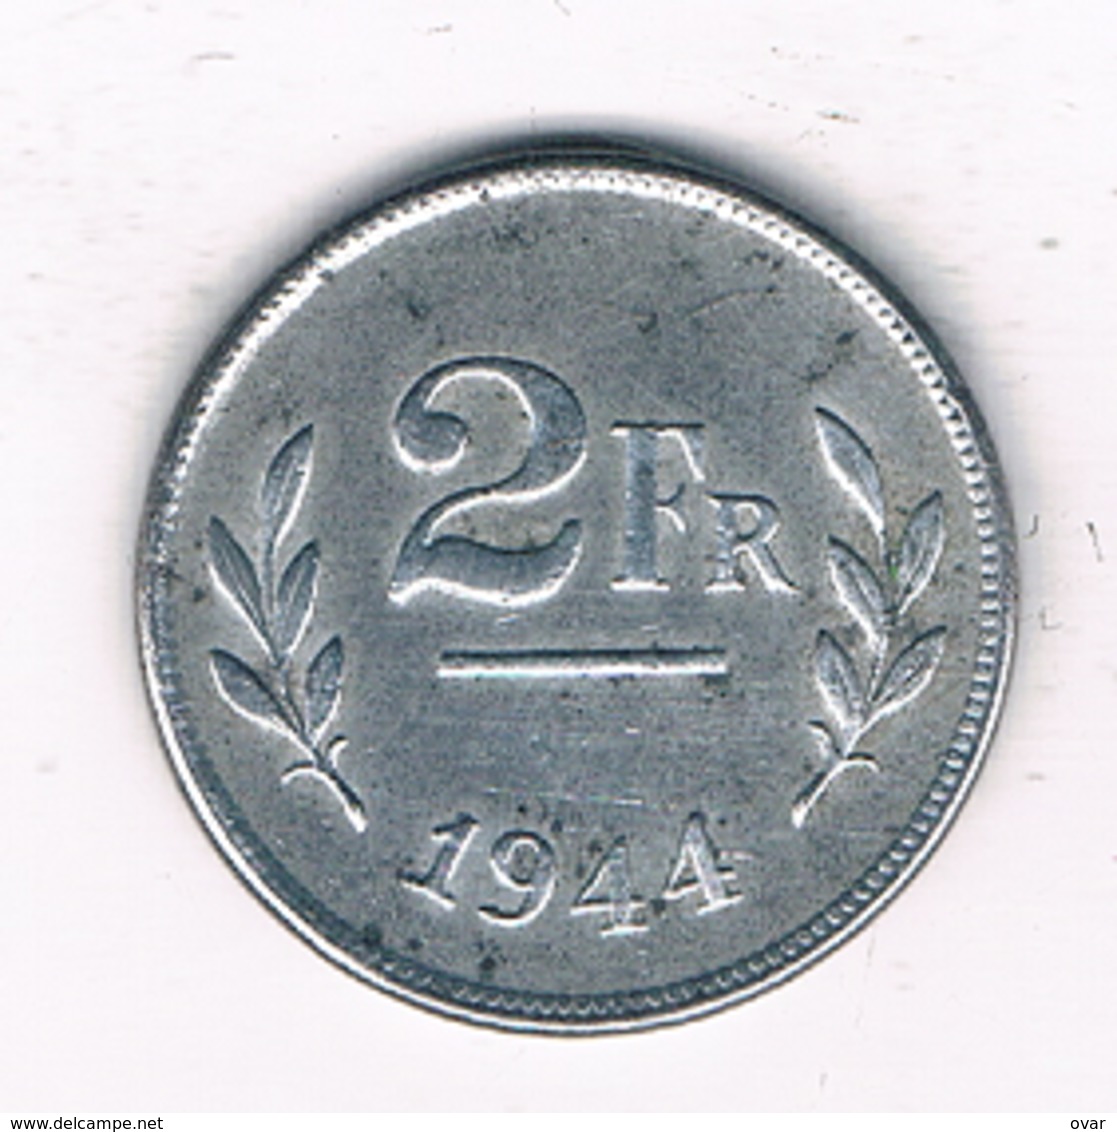 2 FRANC 1944 BELGIE /2510/ - 2 Francs (1944 Libération)